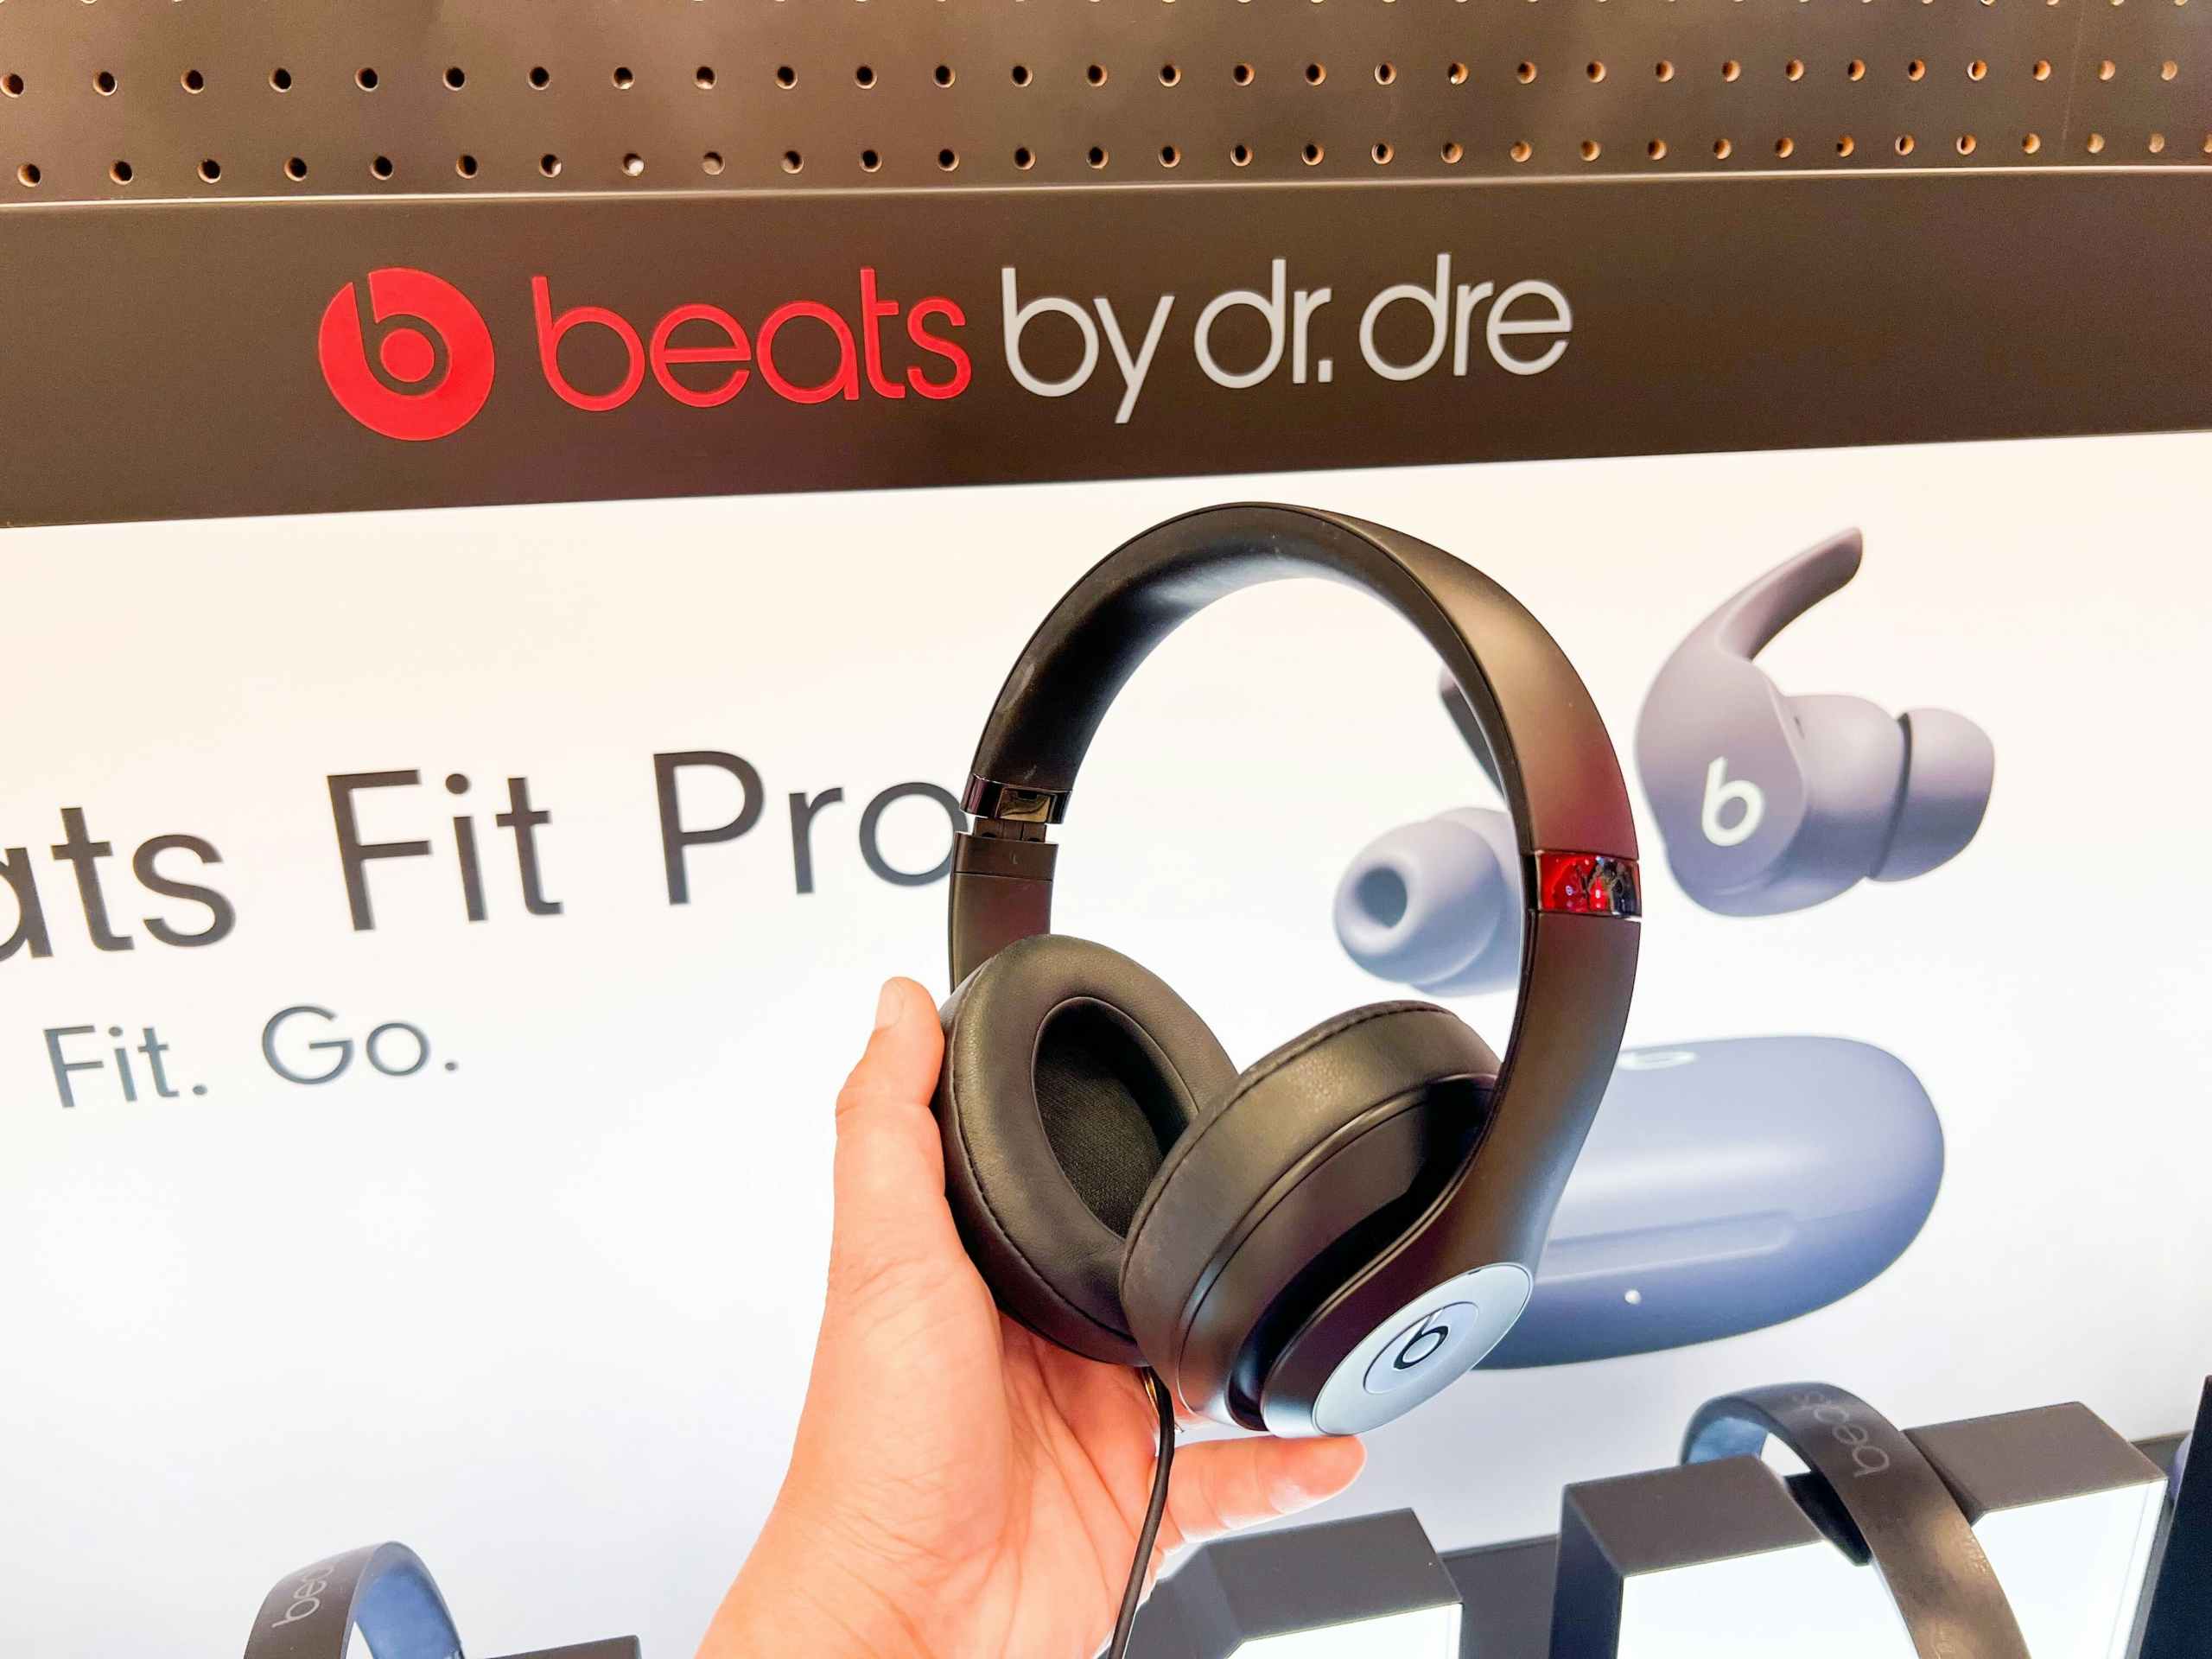 Beats By Dre headphones on display at Target